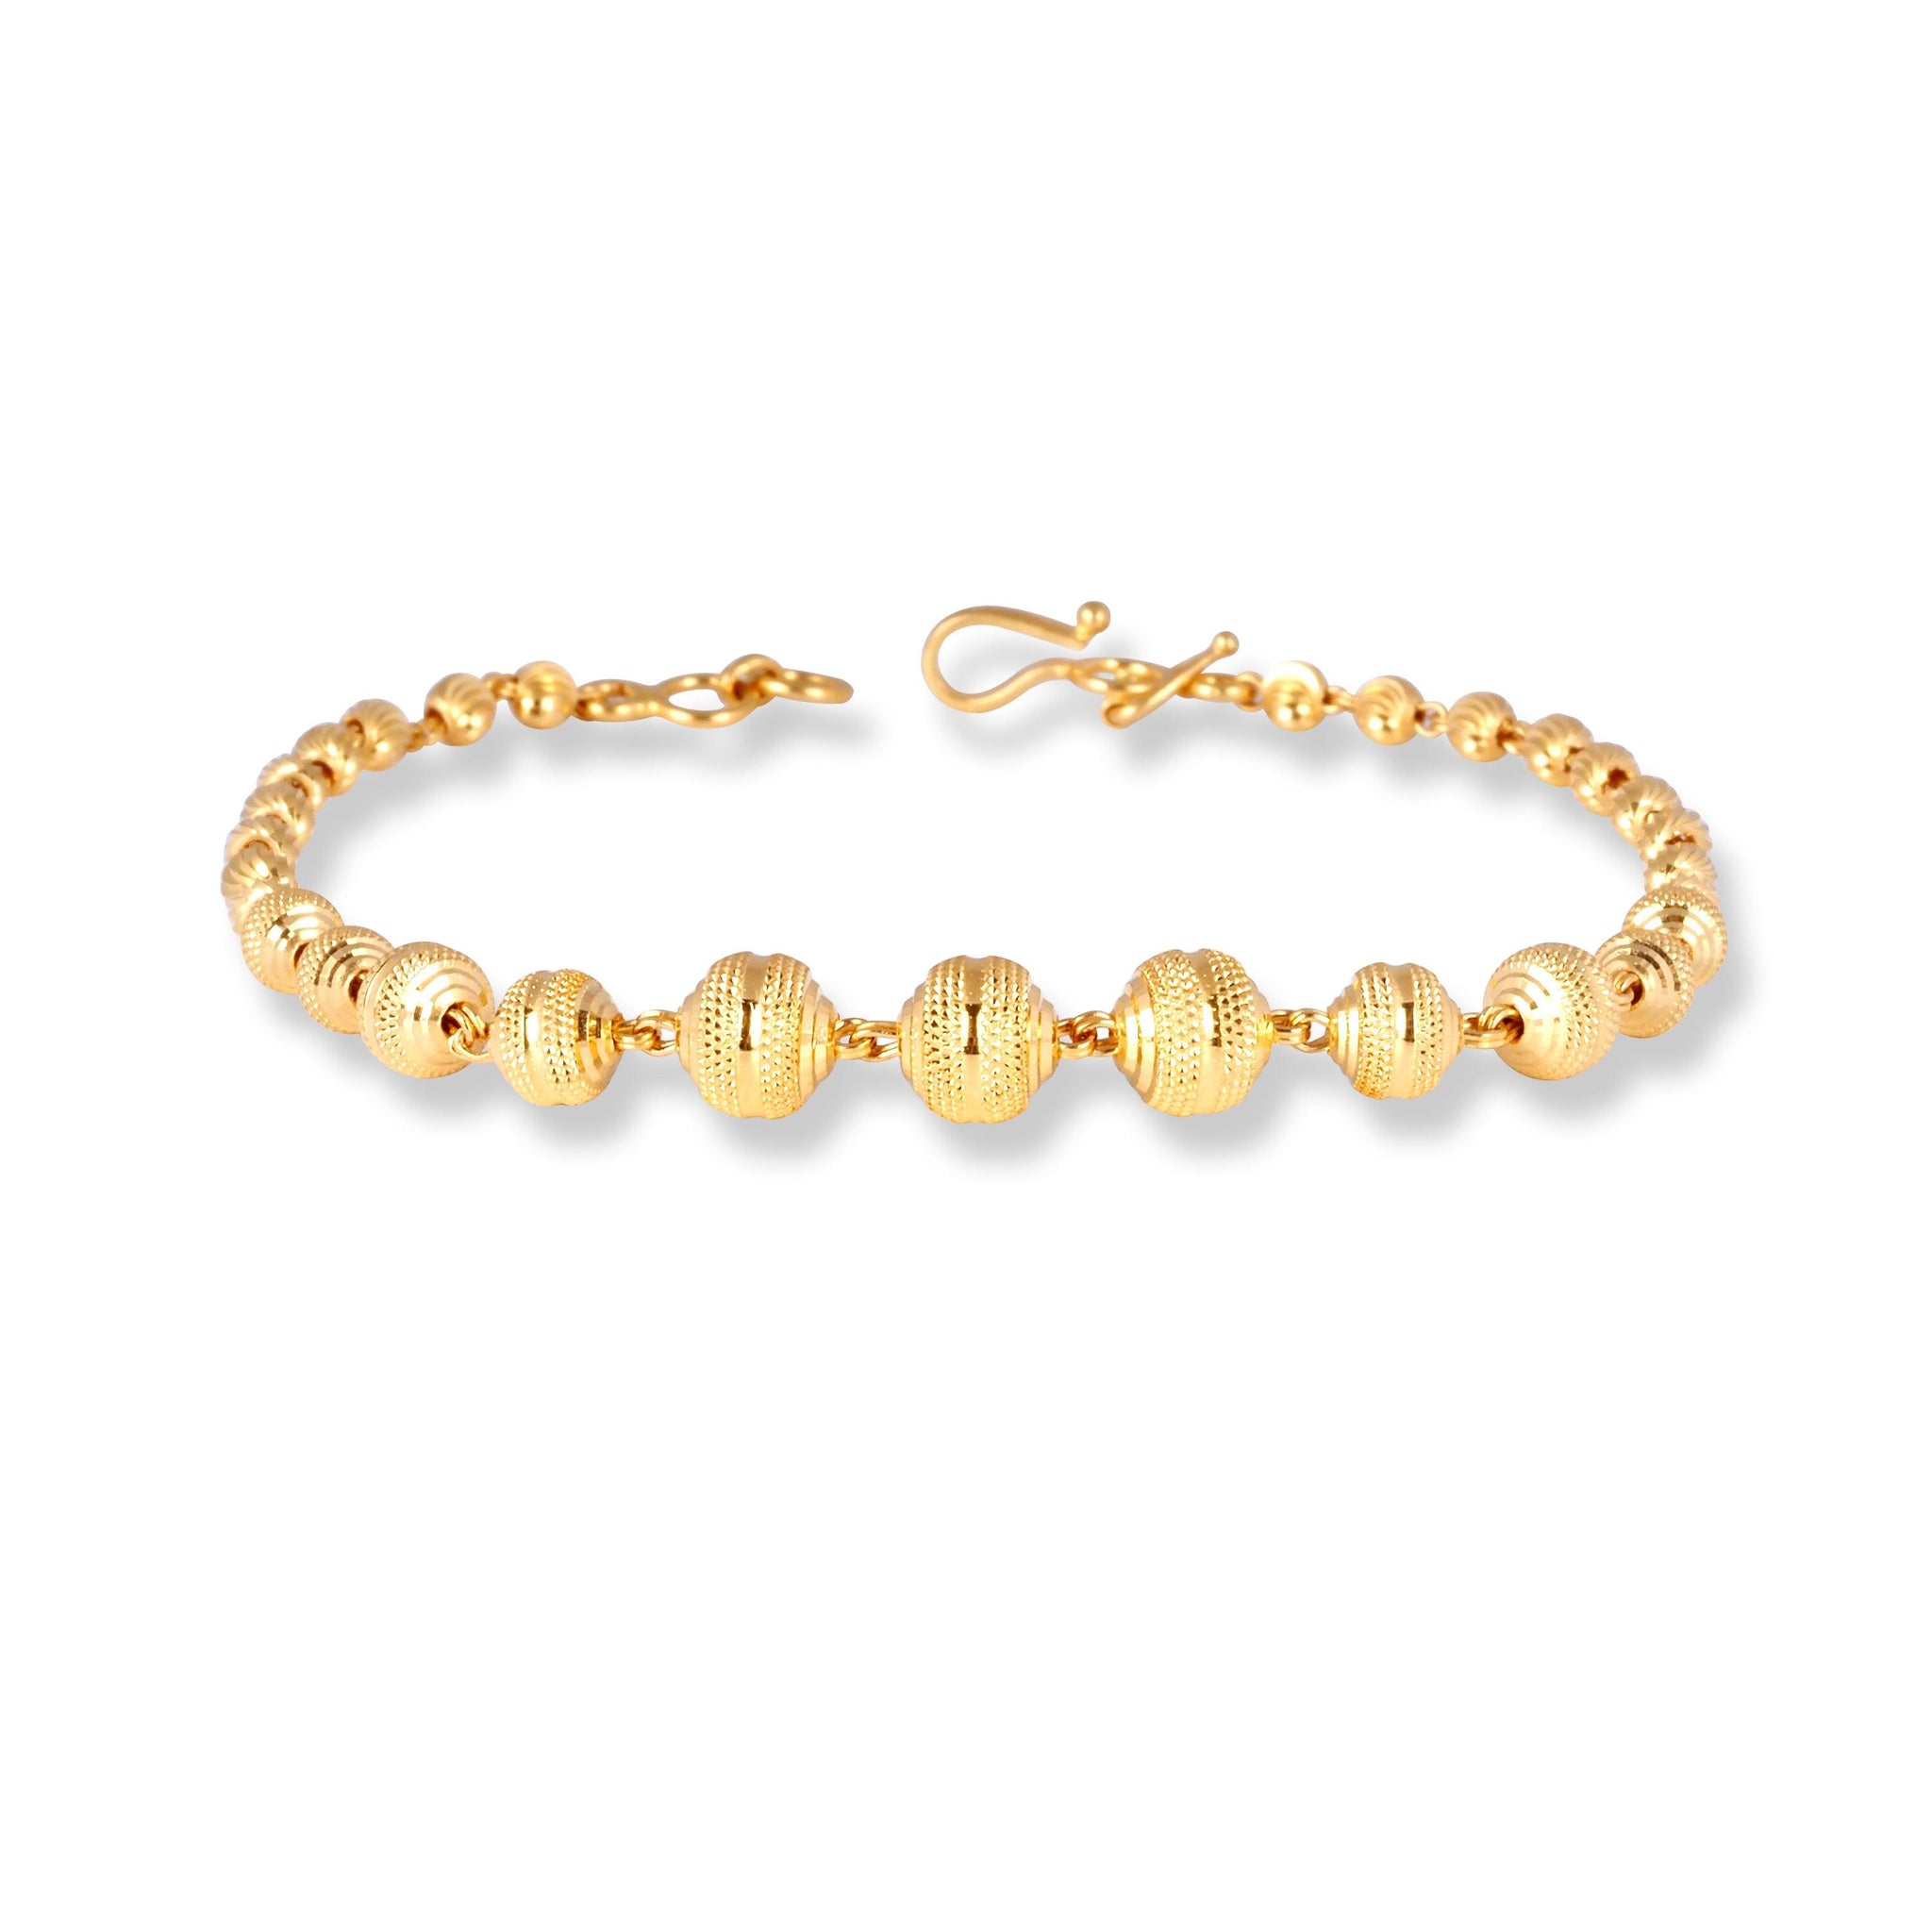 22ct Gold Ladies Bracelet with Diamond Cut Beads & Hook Clasp LBR-7153